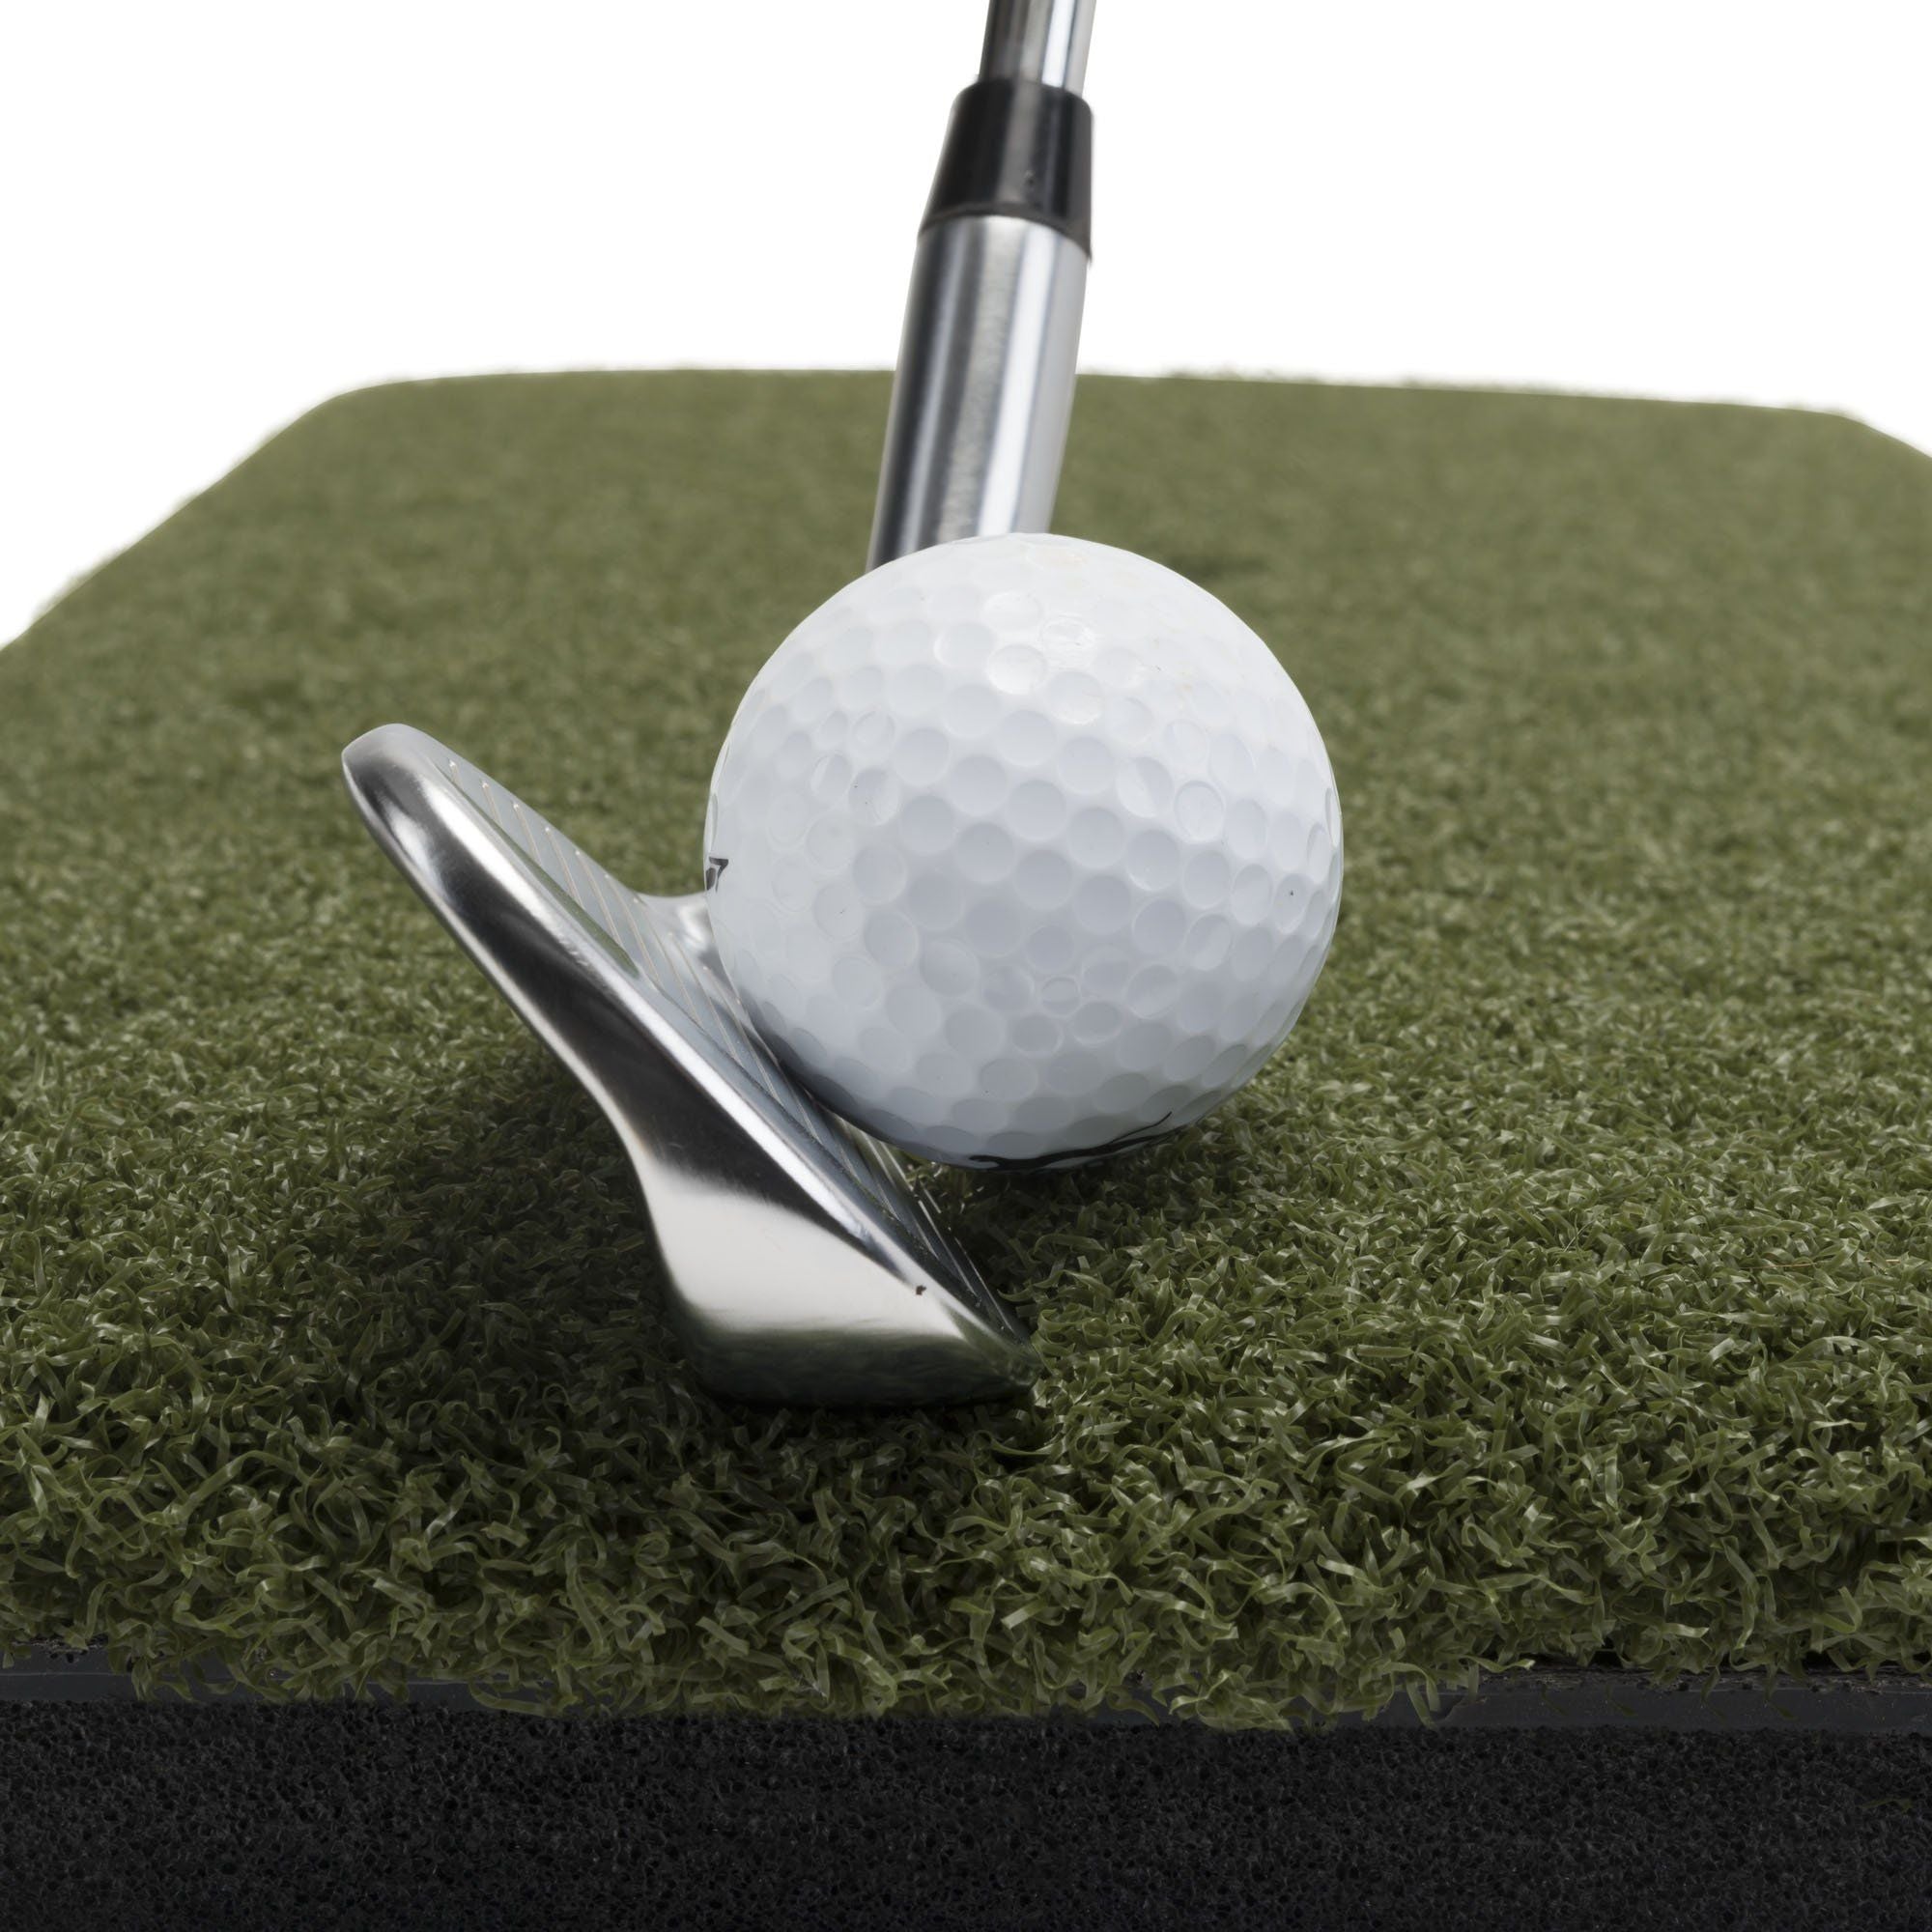 AllSportSystems Golf Simulator Stance Mats